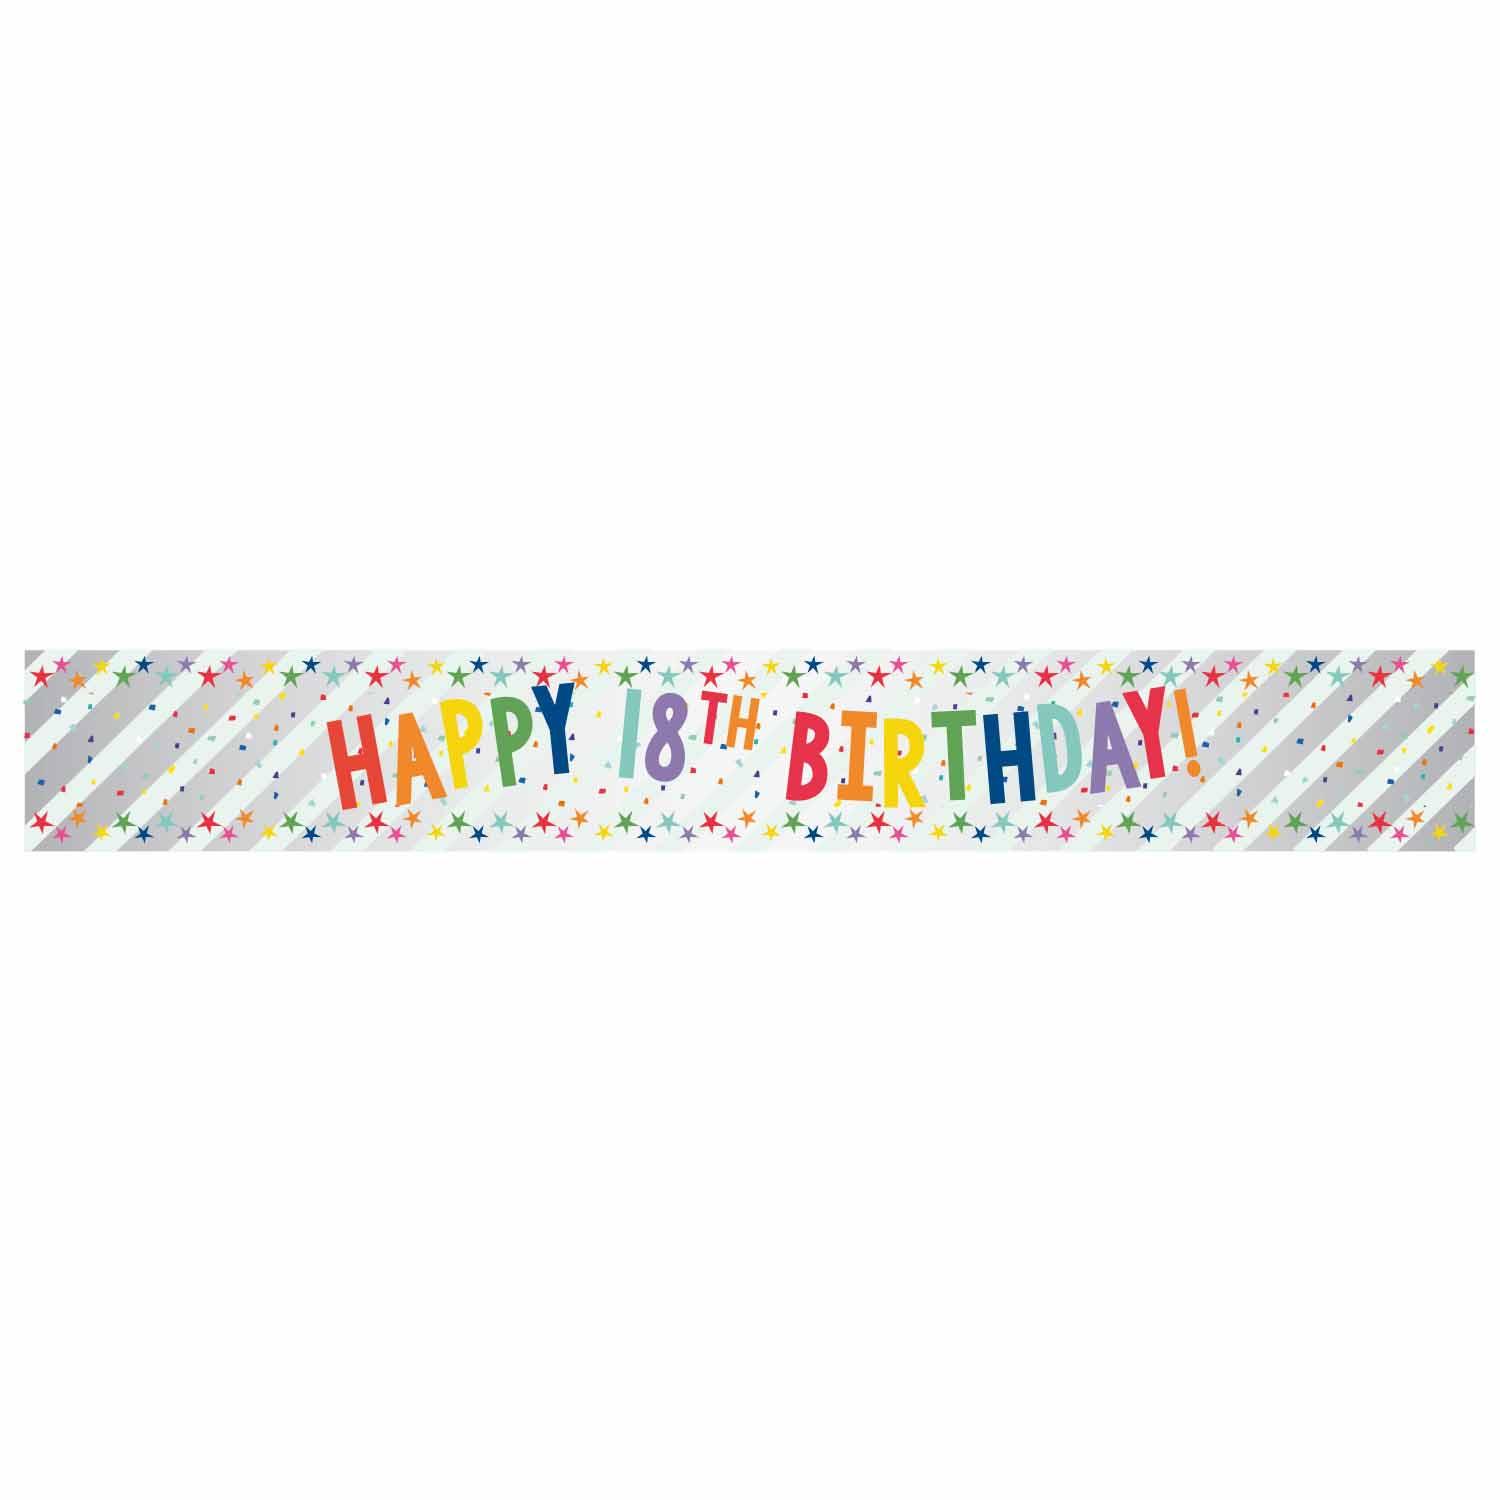 Happy 18th Birthday Foil Banner